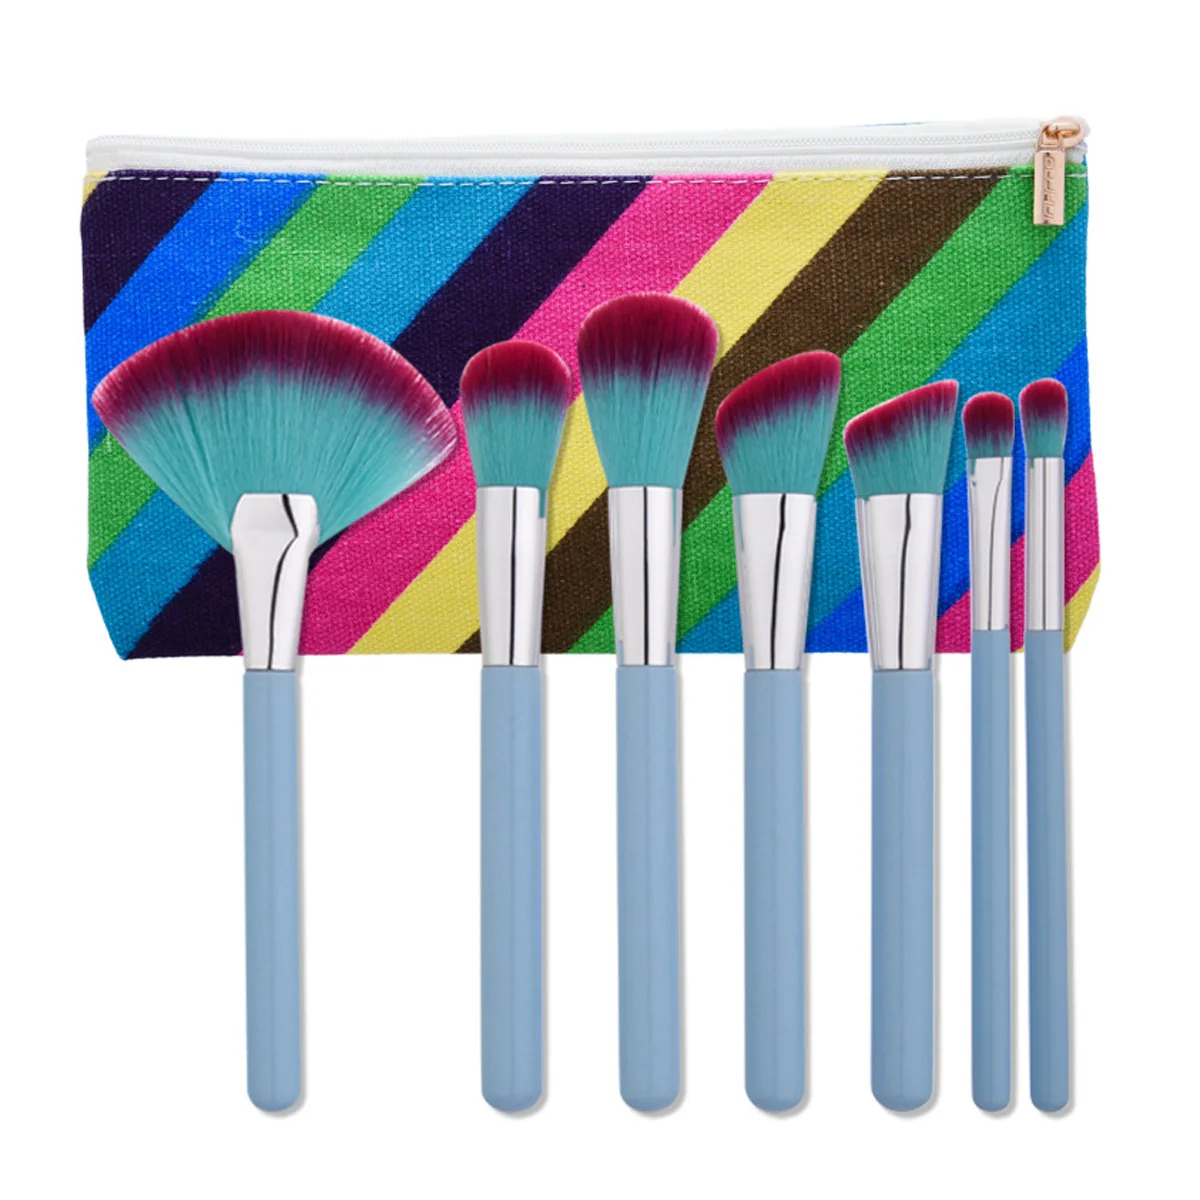 

7pcs Makeup Brushes Tools Set Soft Hair Eyeshadow Blusher Powder Foundation Brush Cosmetic Brush Make Up Tool Kits